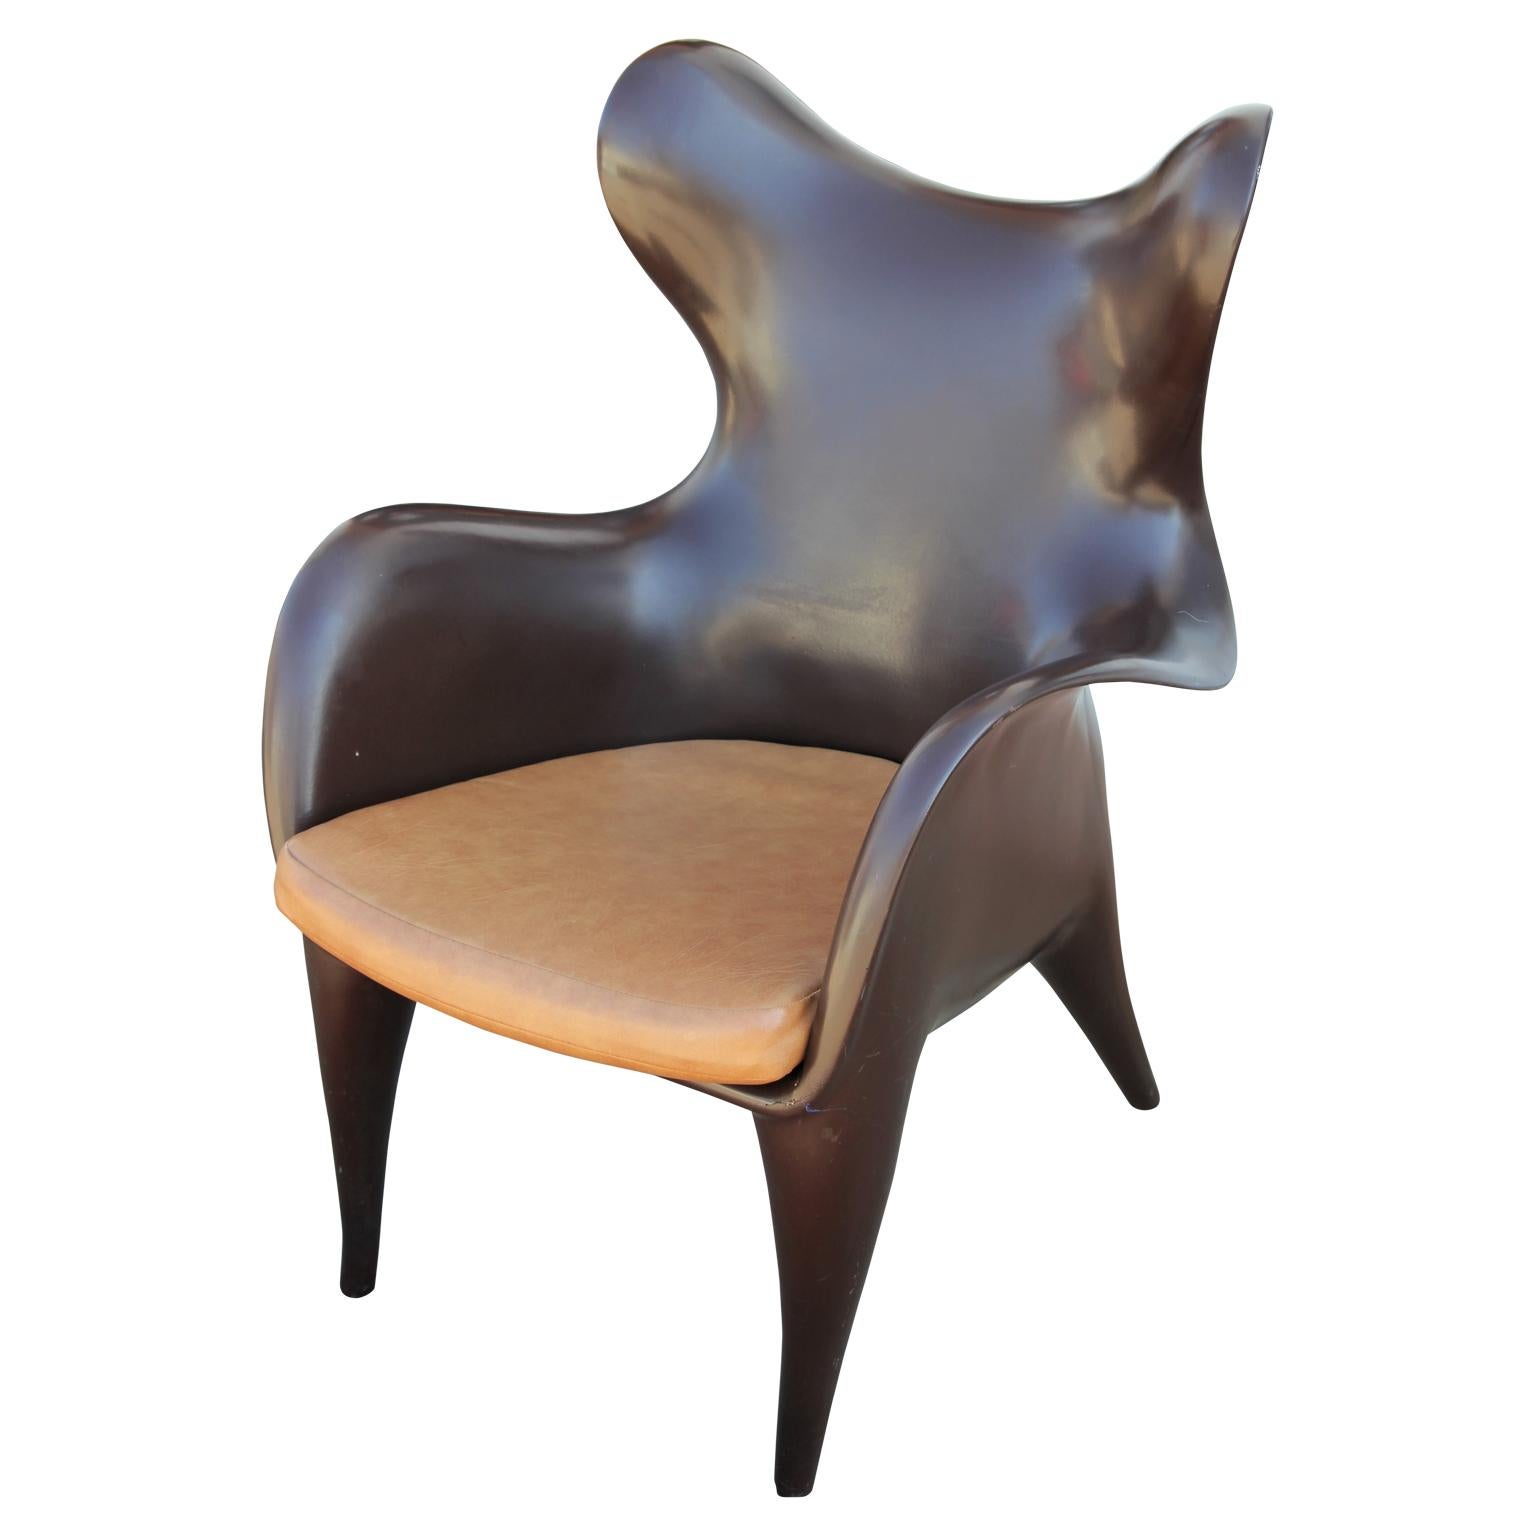 Contemporary Pair of Modern Sculptural Johnnie Chairs by Jordan Mozer